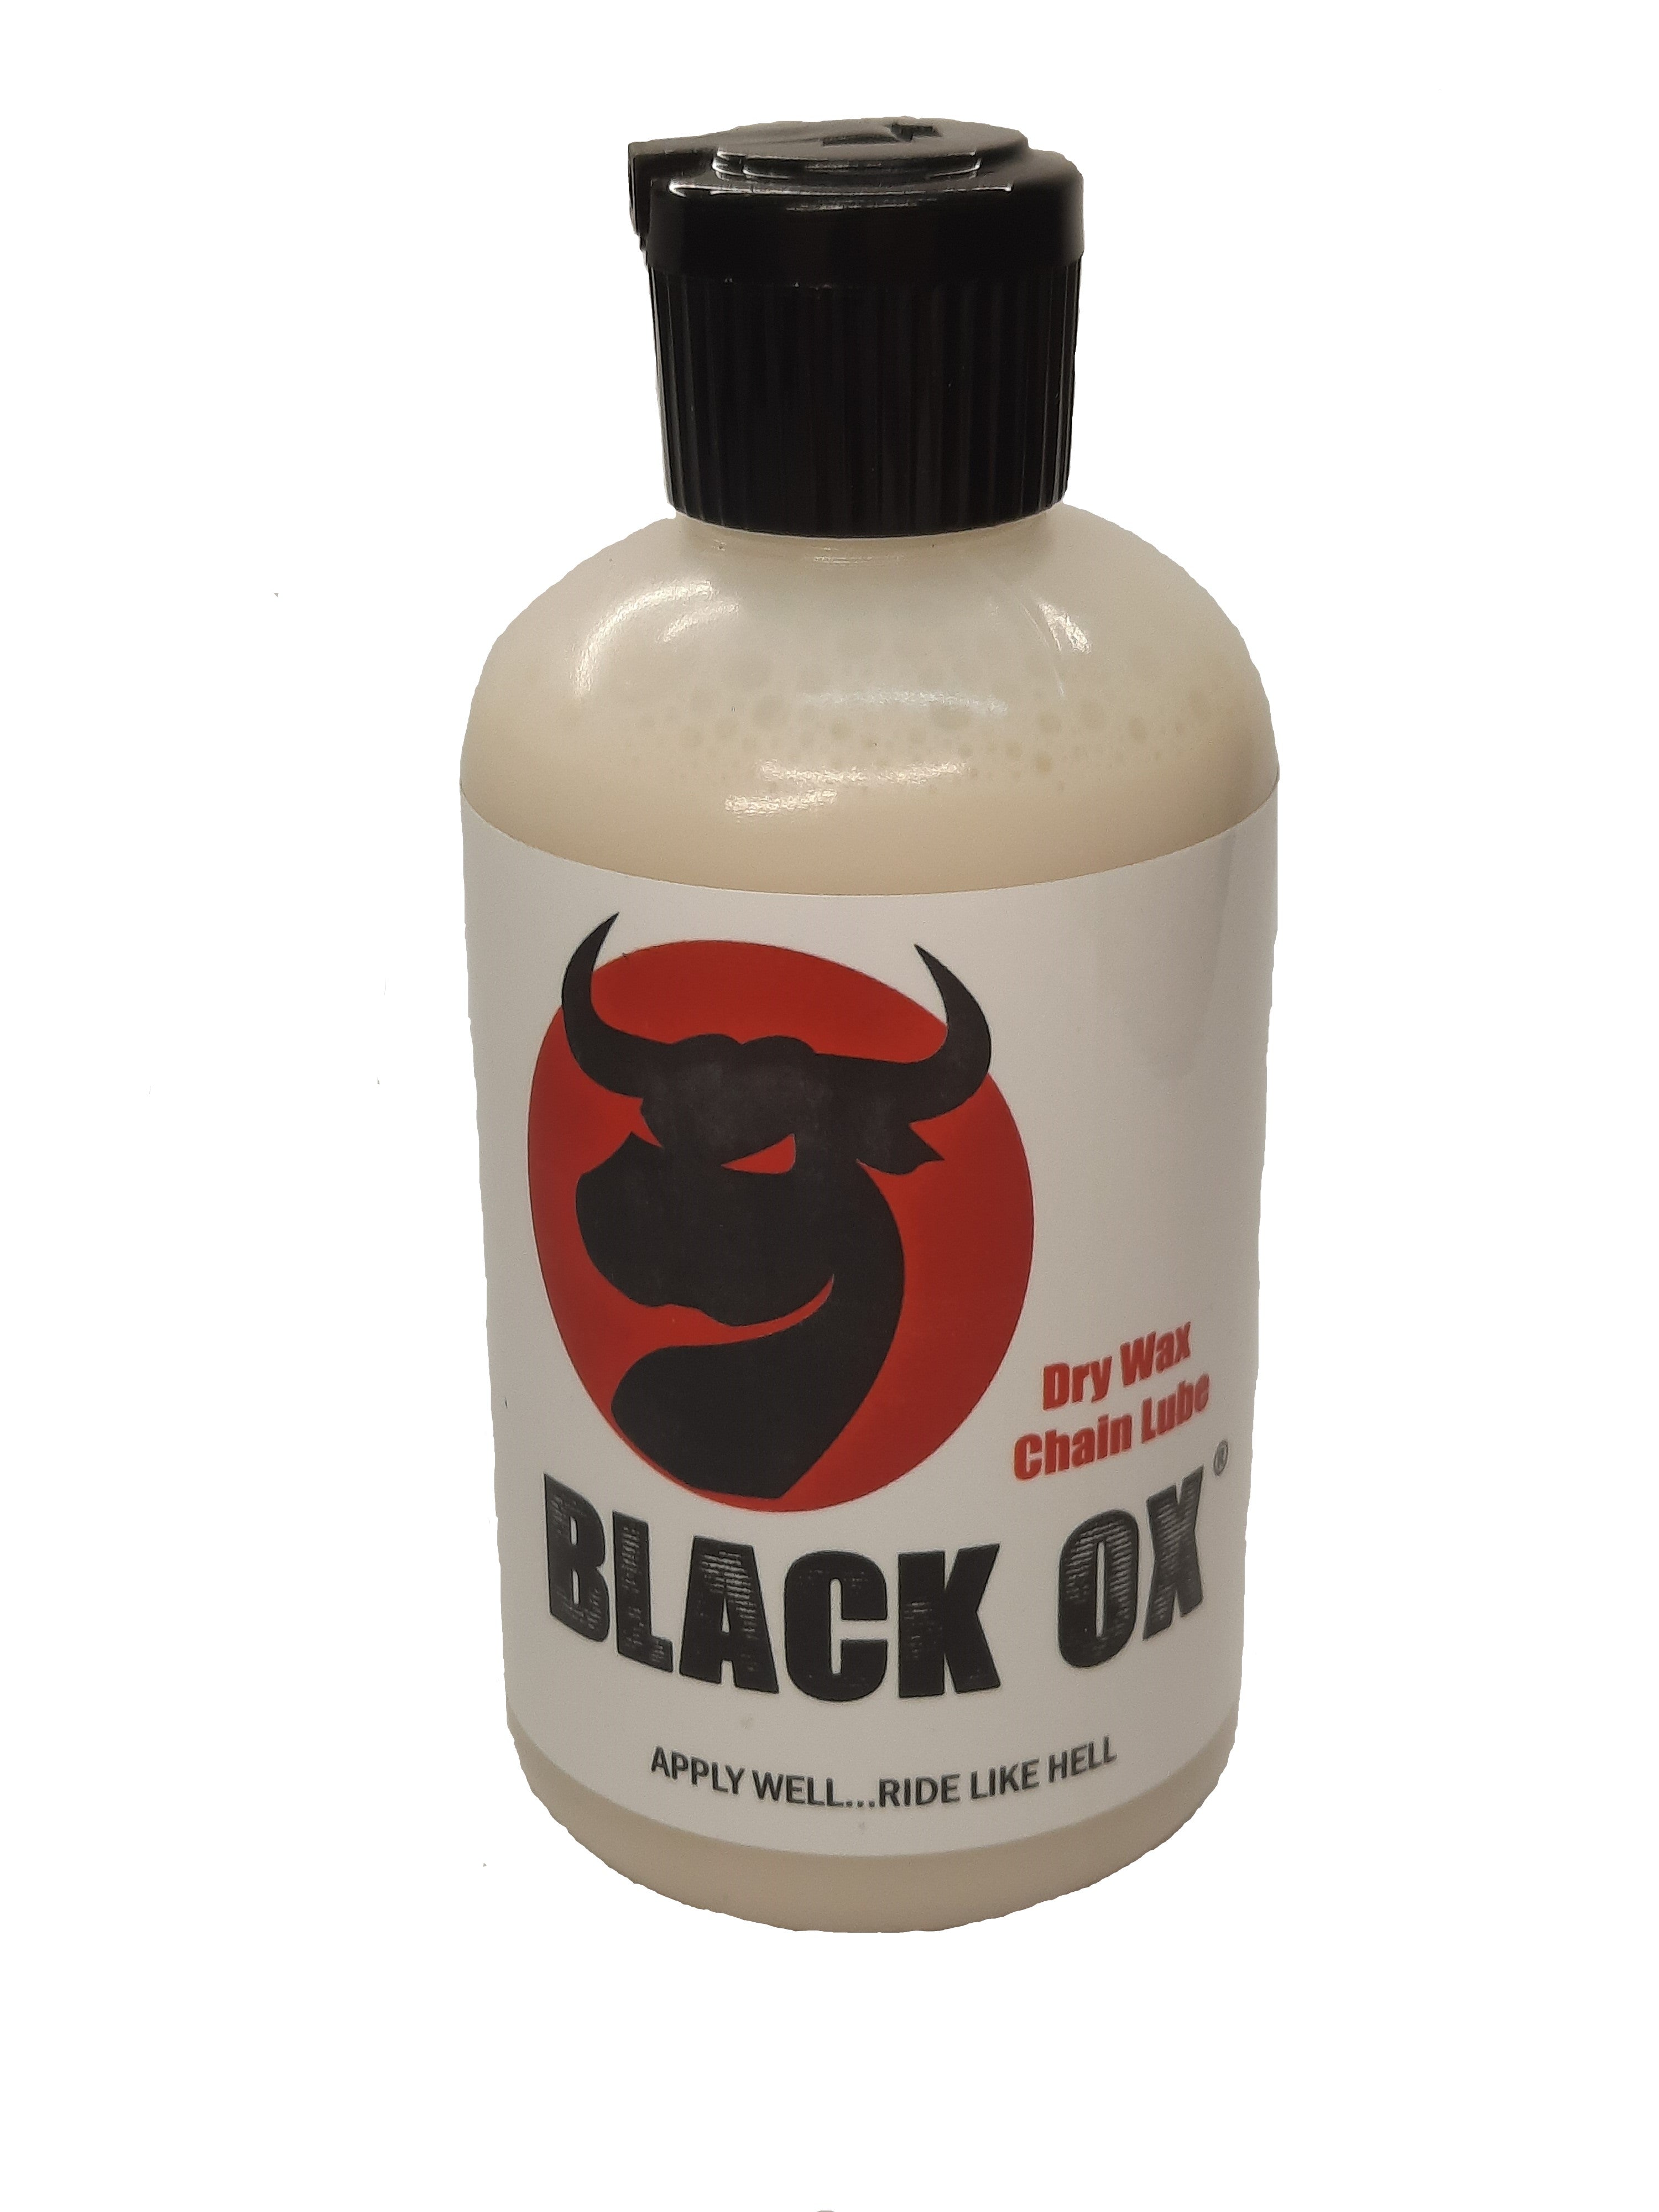 Black Ox Dry Wax Chain Lube 4oz